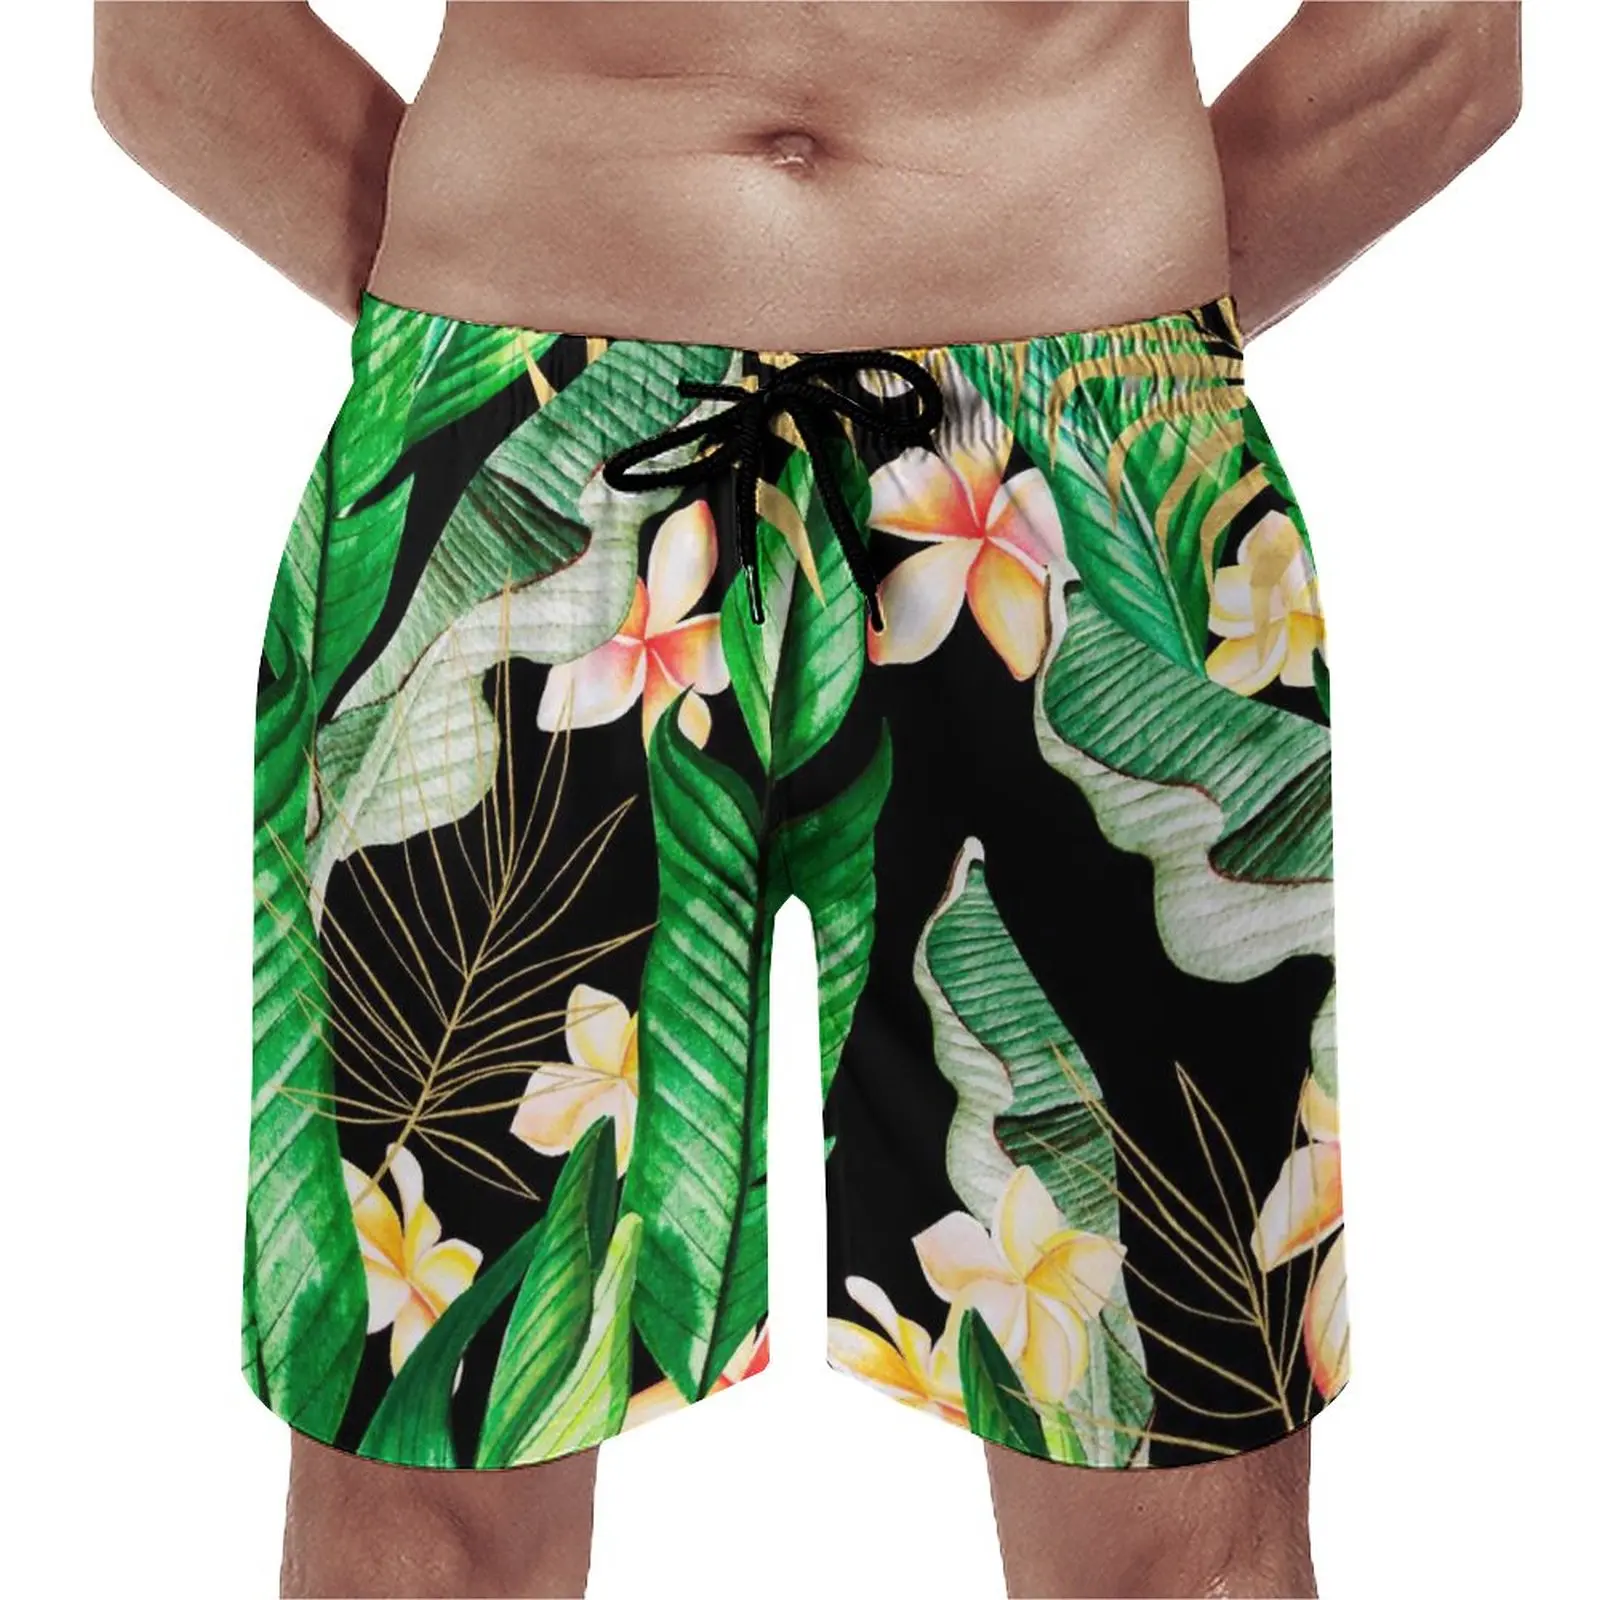 

Summer Gym Shorts Jungle Palm Leaves Running Surf Tropical Forest Flower Print Design Board Short Pants Comfortable Swim Trunks